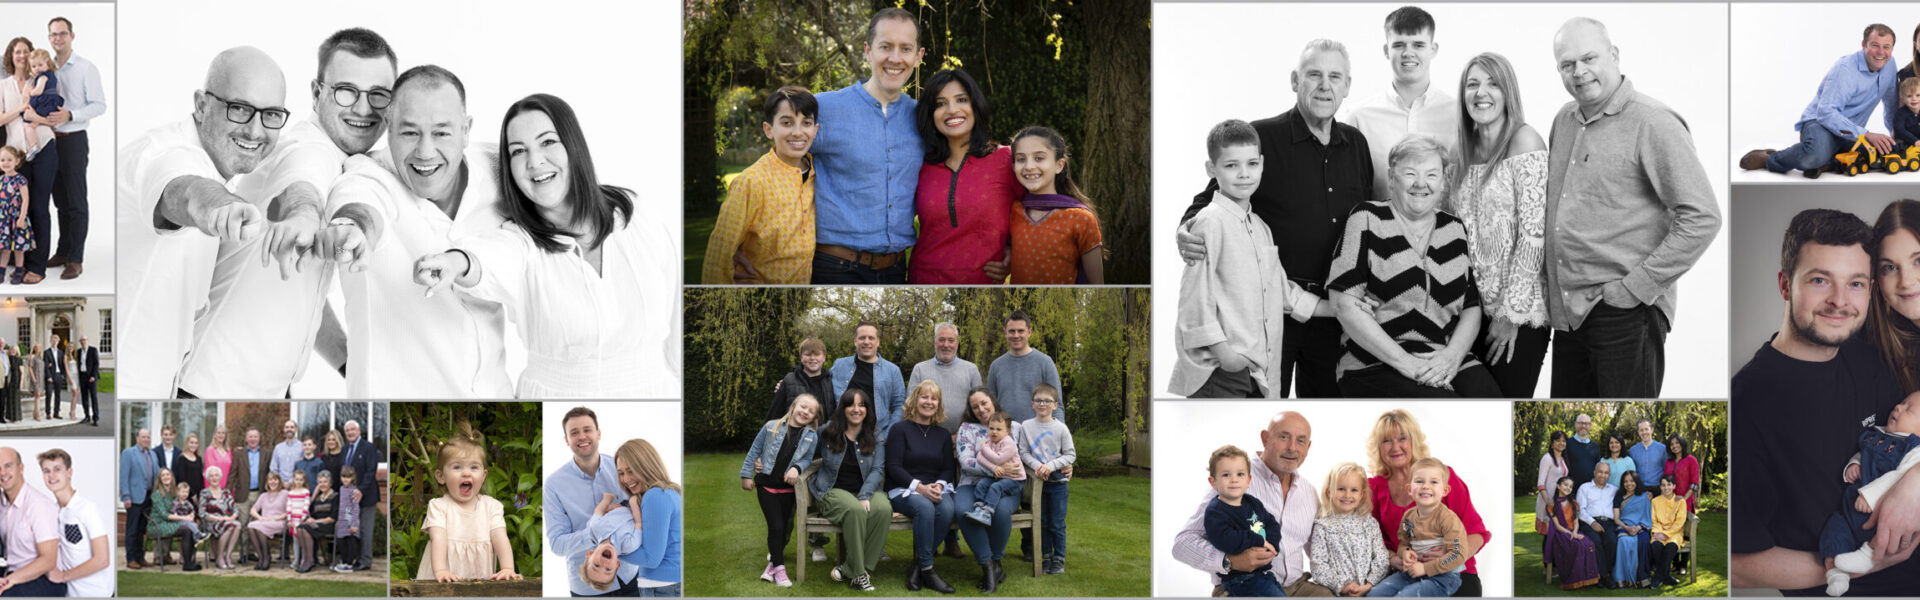 Family portraits Bromsgrove, large family group photoshoots